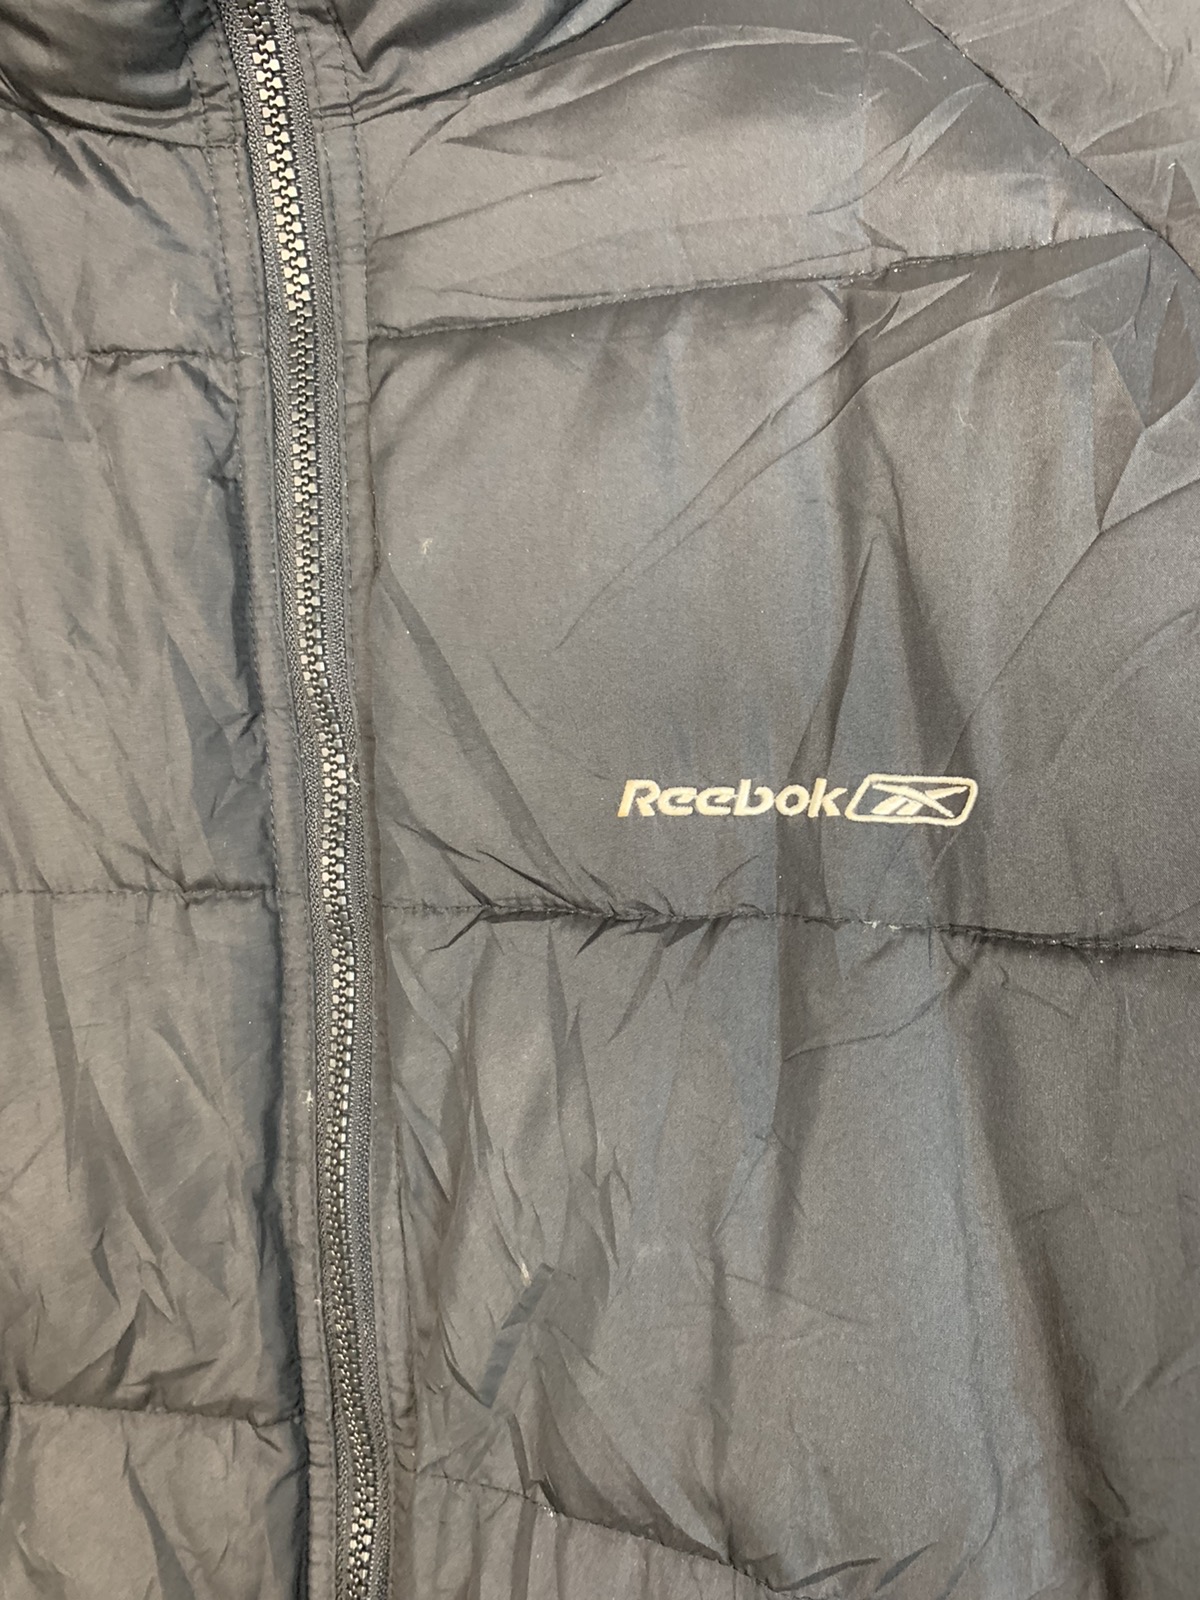 Reebok jackets - 3